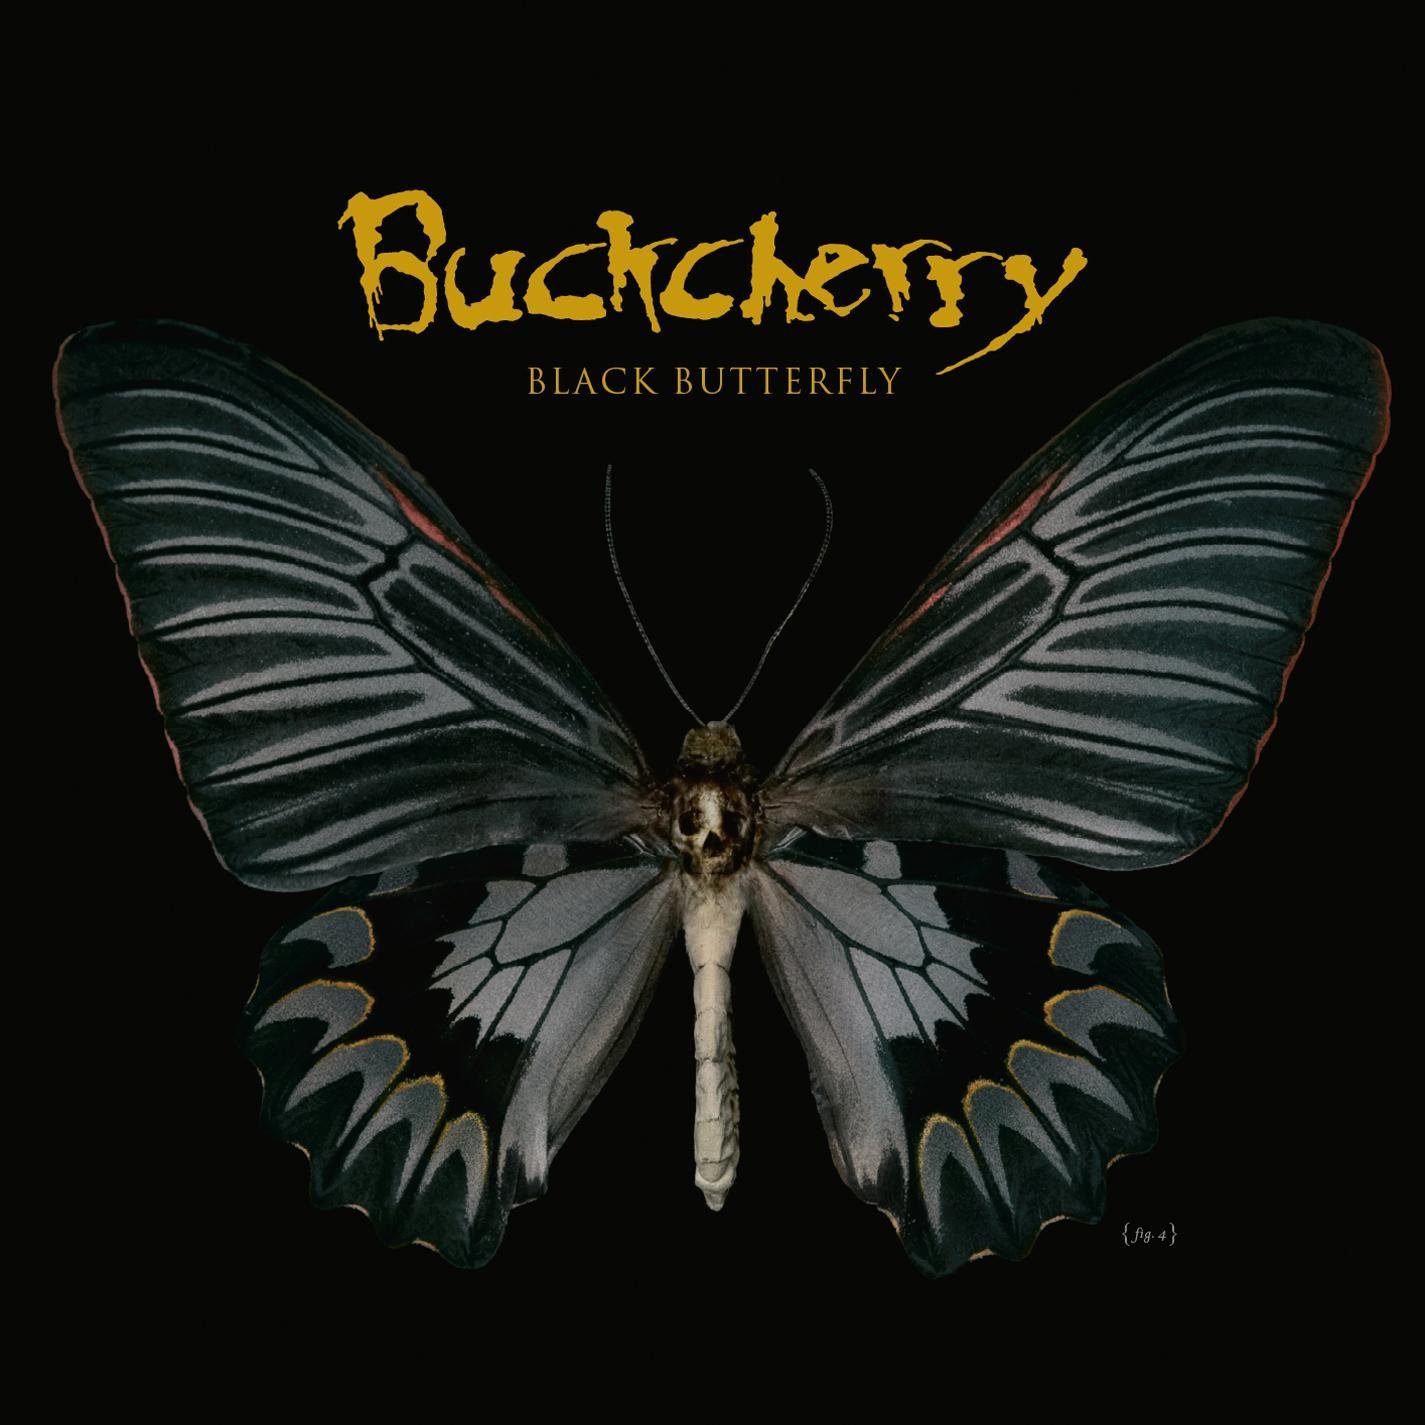 Buckcherry - Black Butterfly - Amazon.com Music